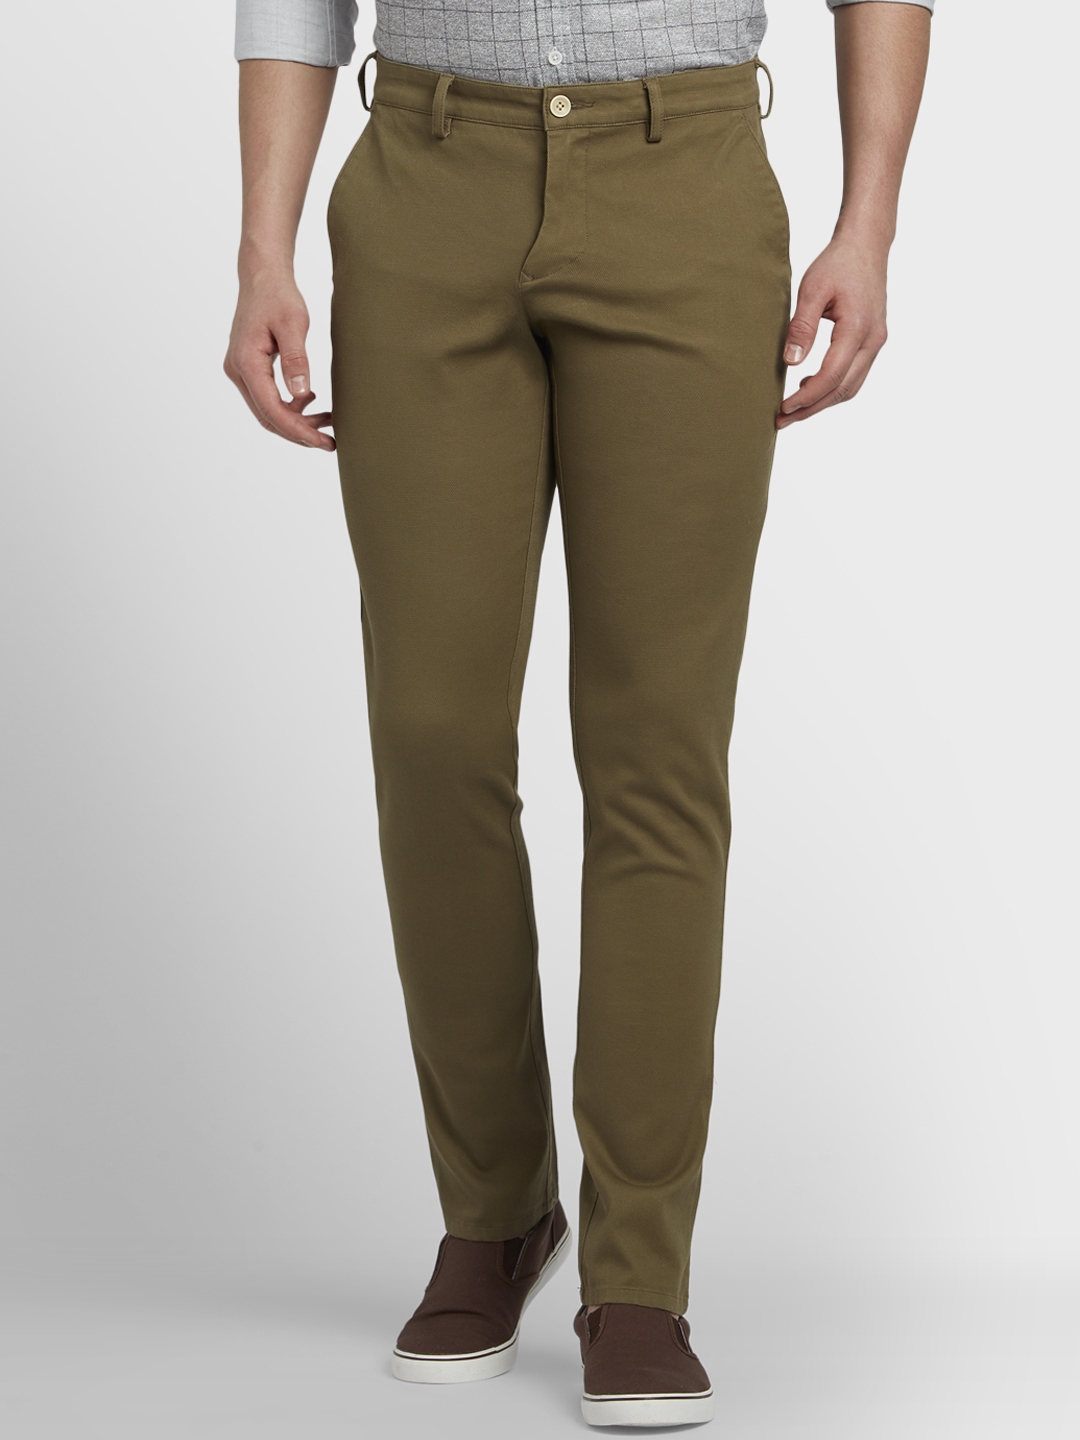 Buy ColorPlus Men Olive Green Regular Fit Solid Formal Trousers ...